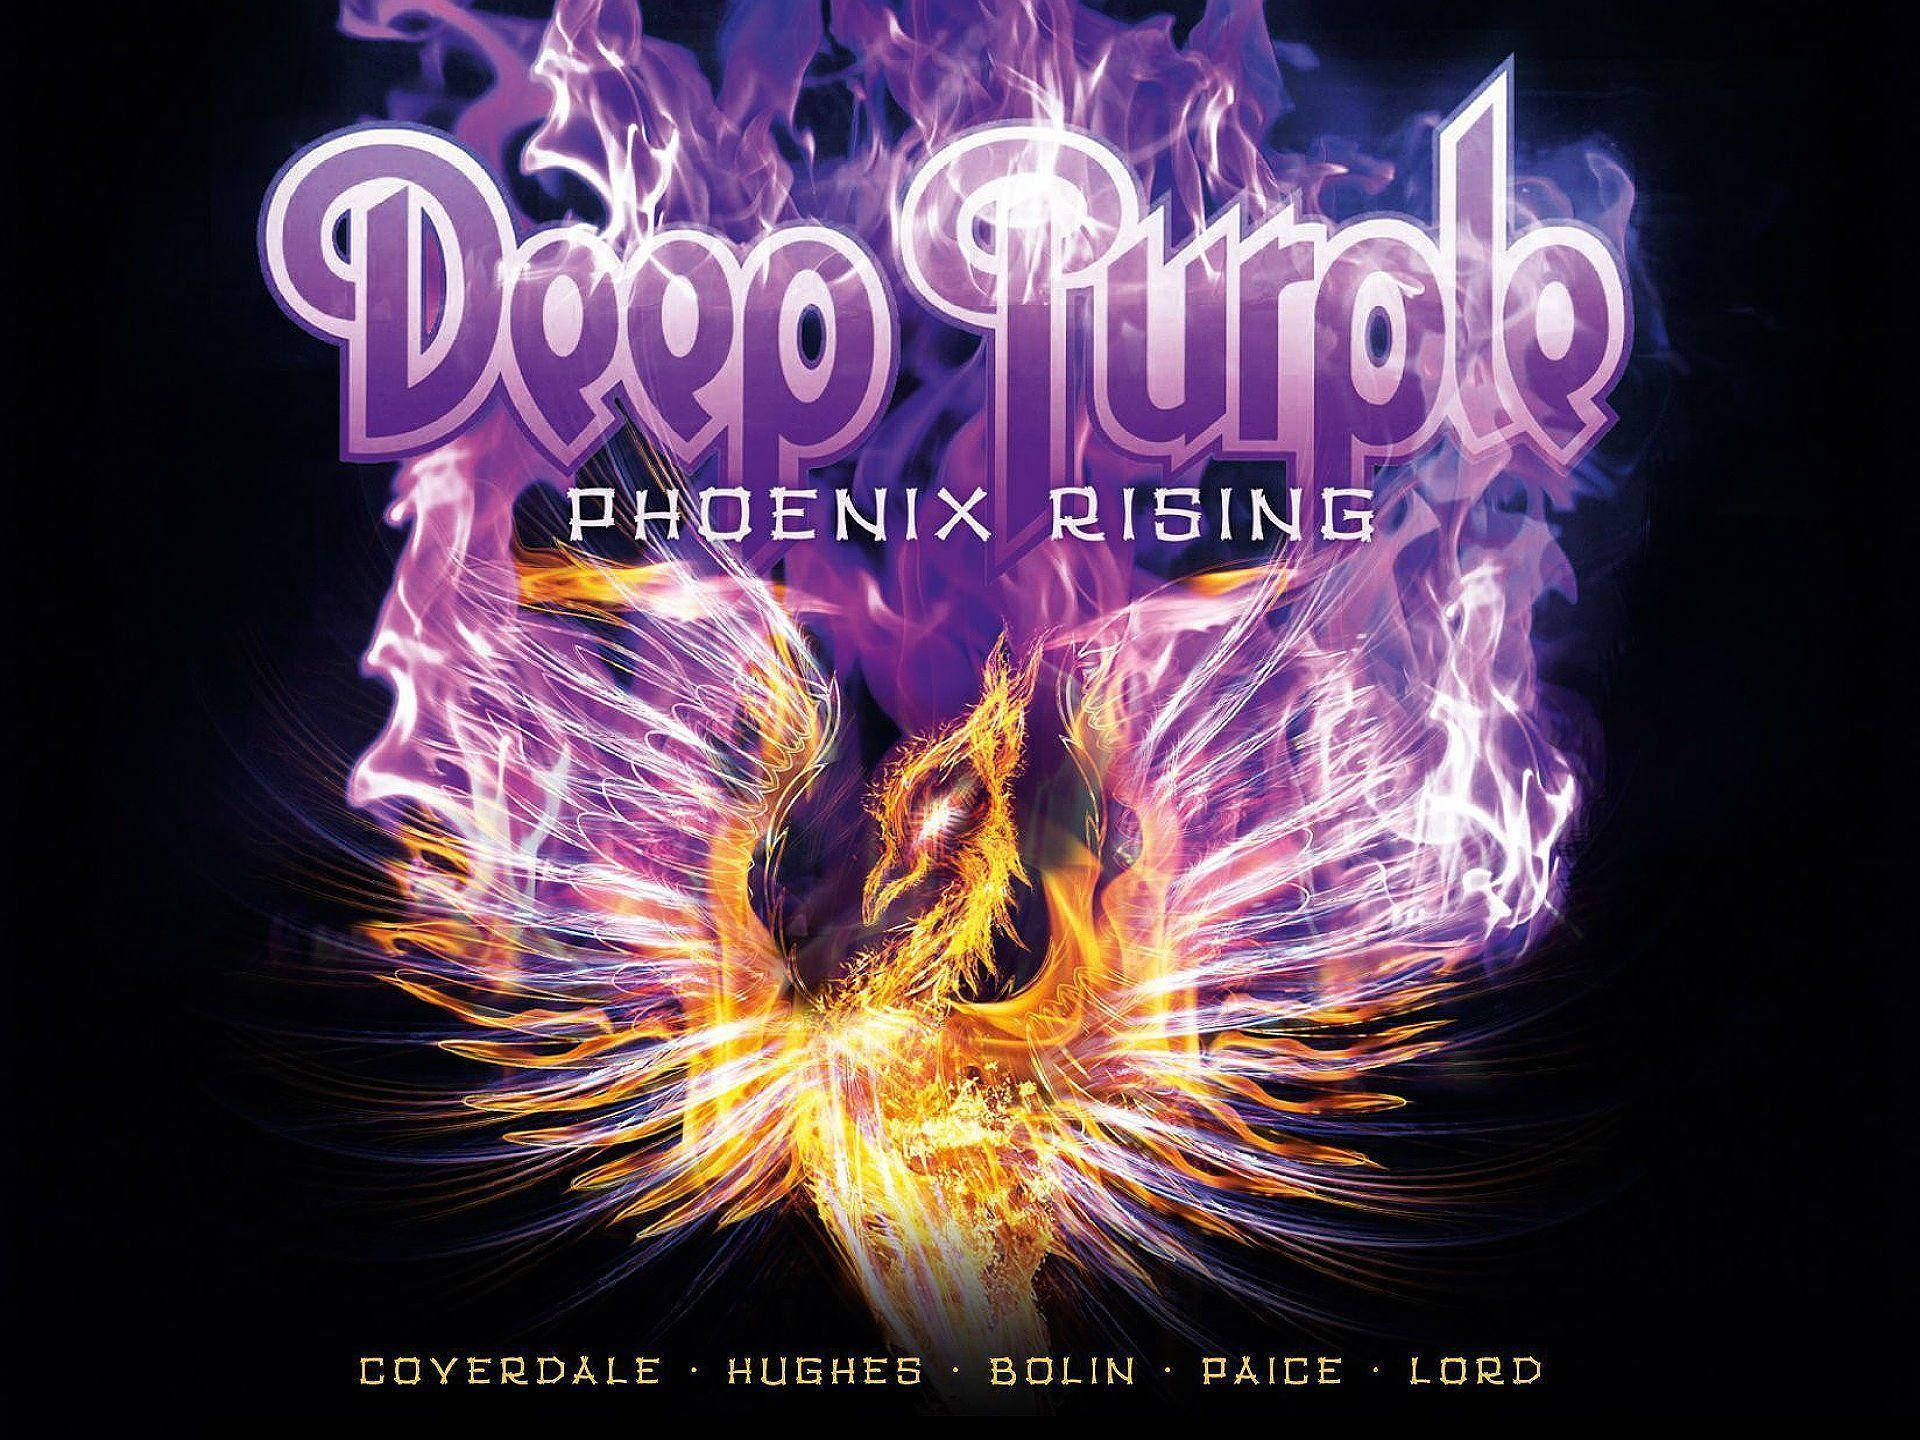 English Rock Band Deep Purple Phoenix Rising Album Cover Wallpaper